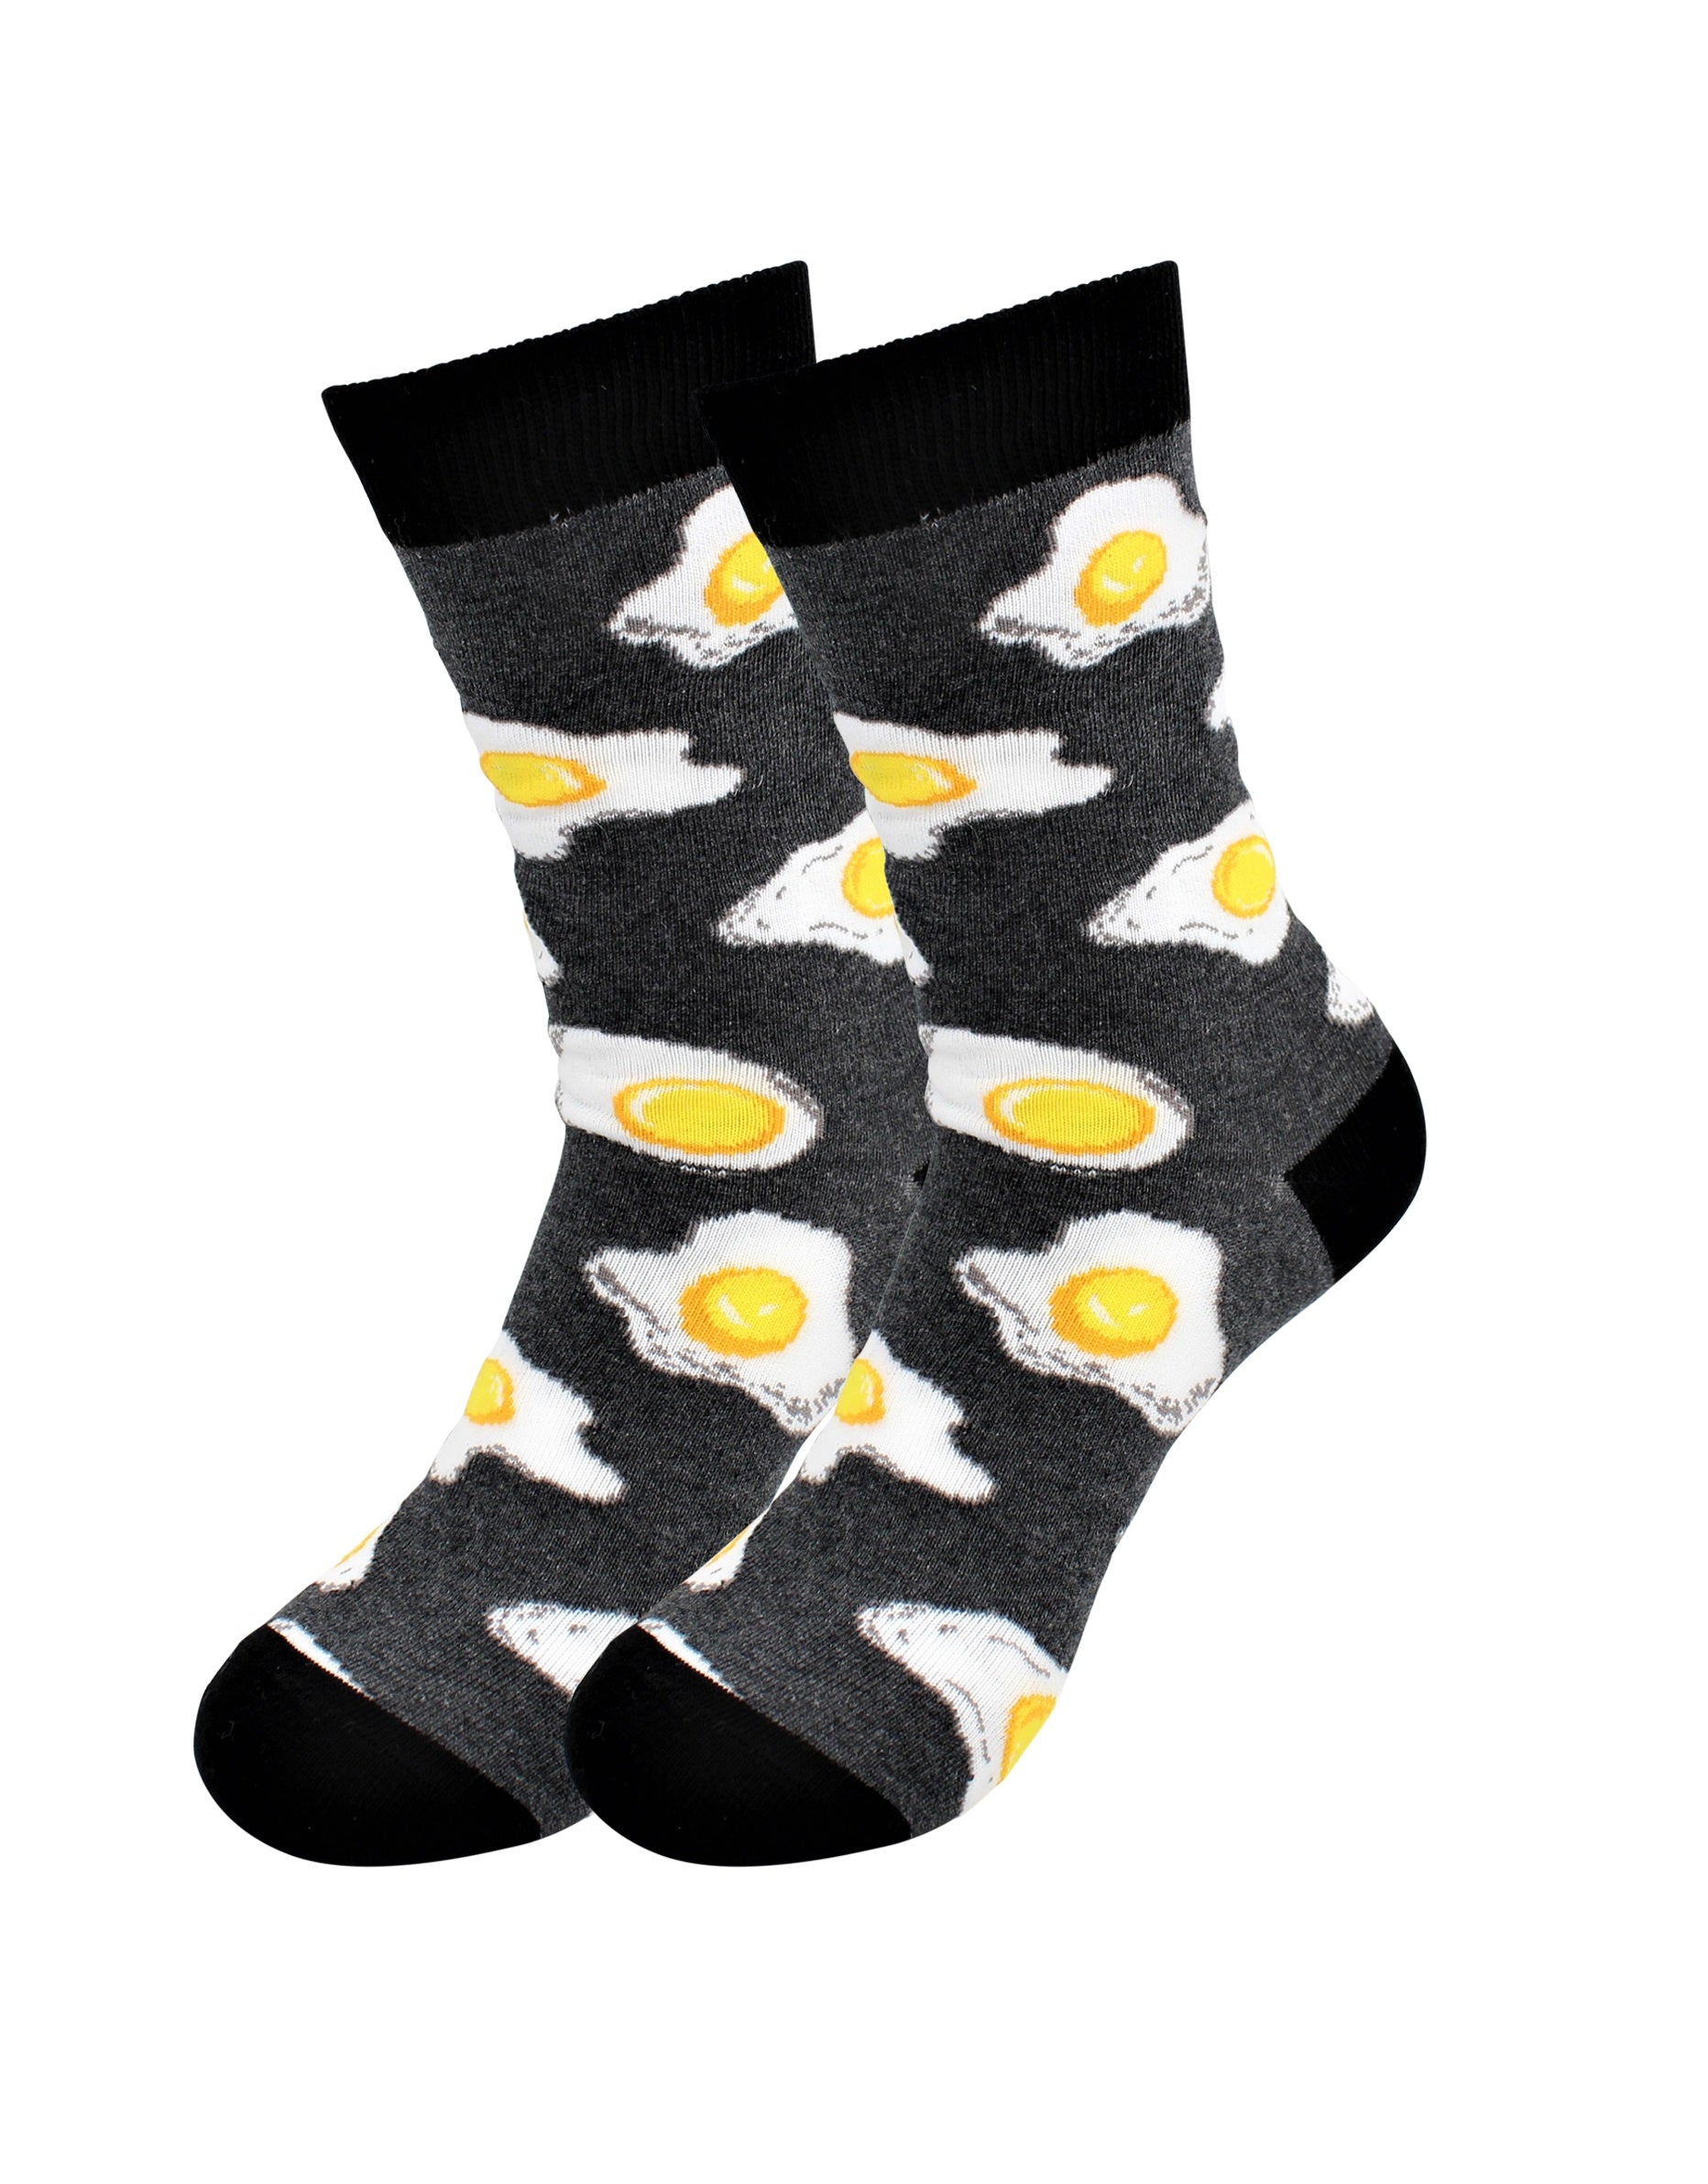 Cozy Designer Food Socks